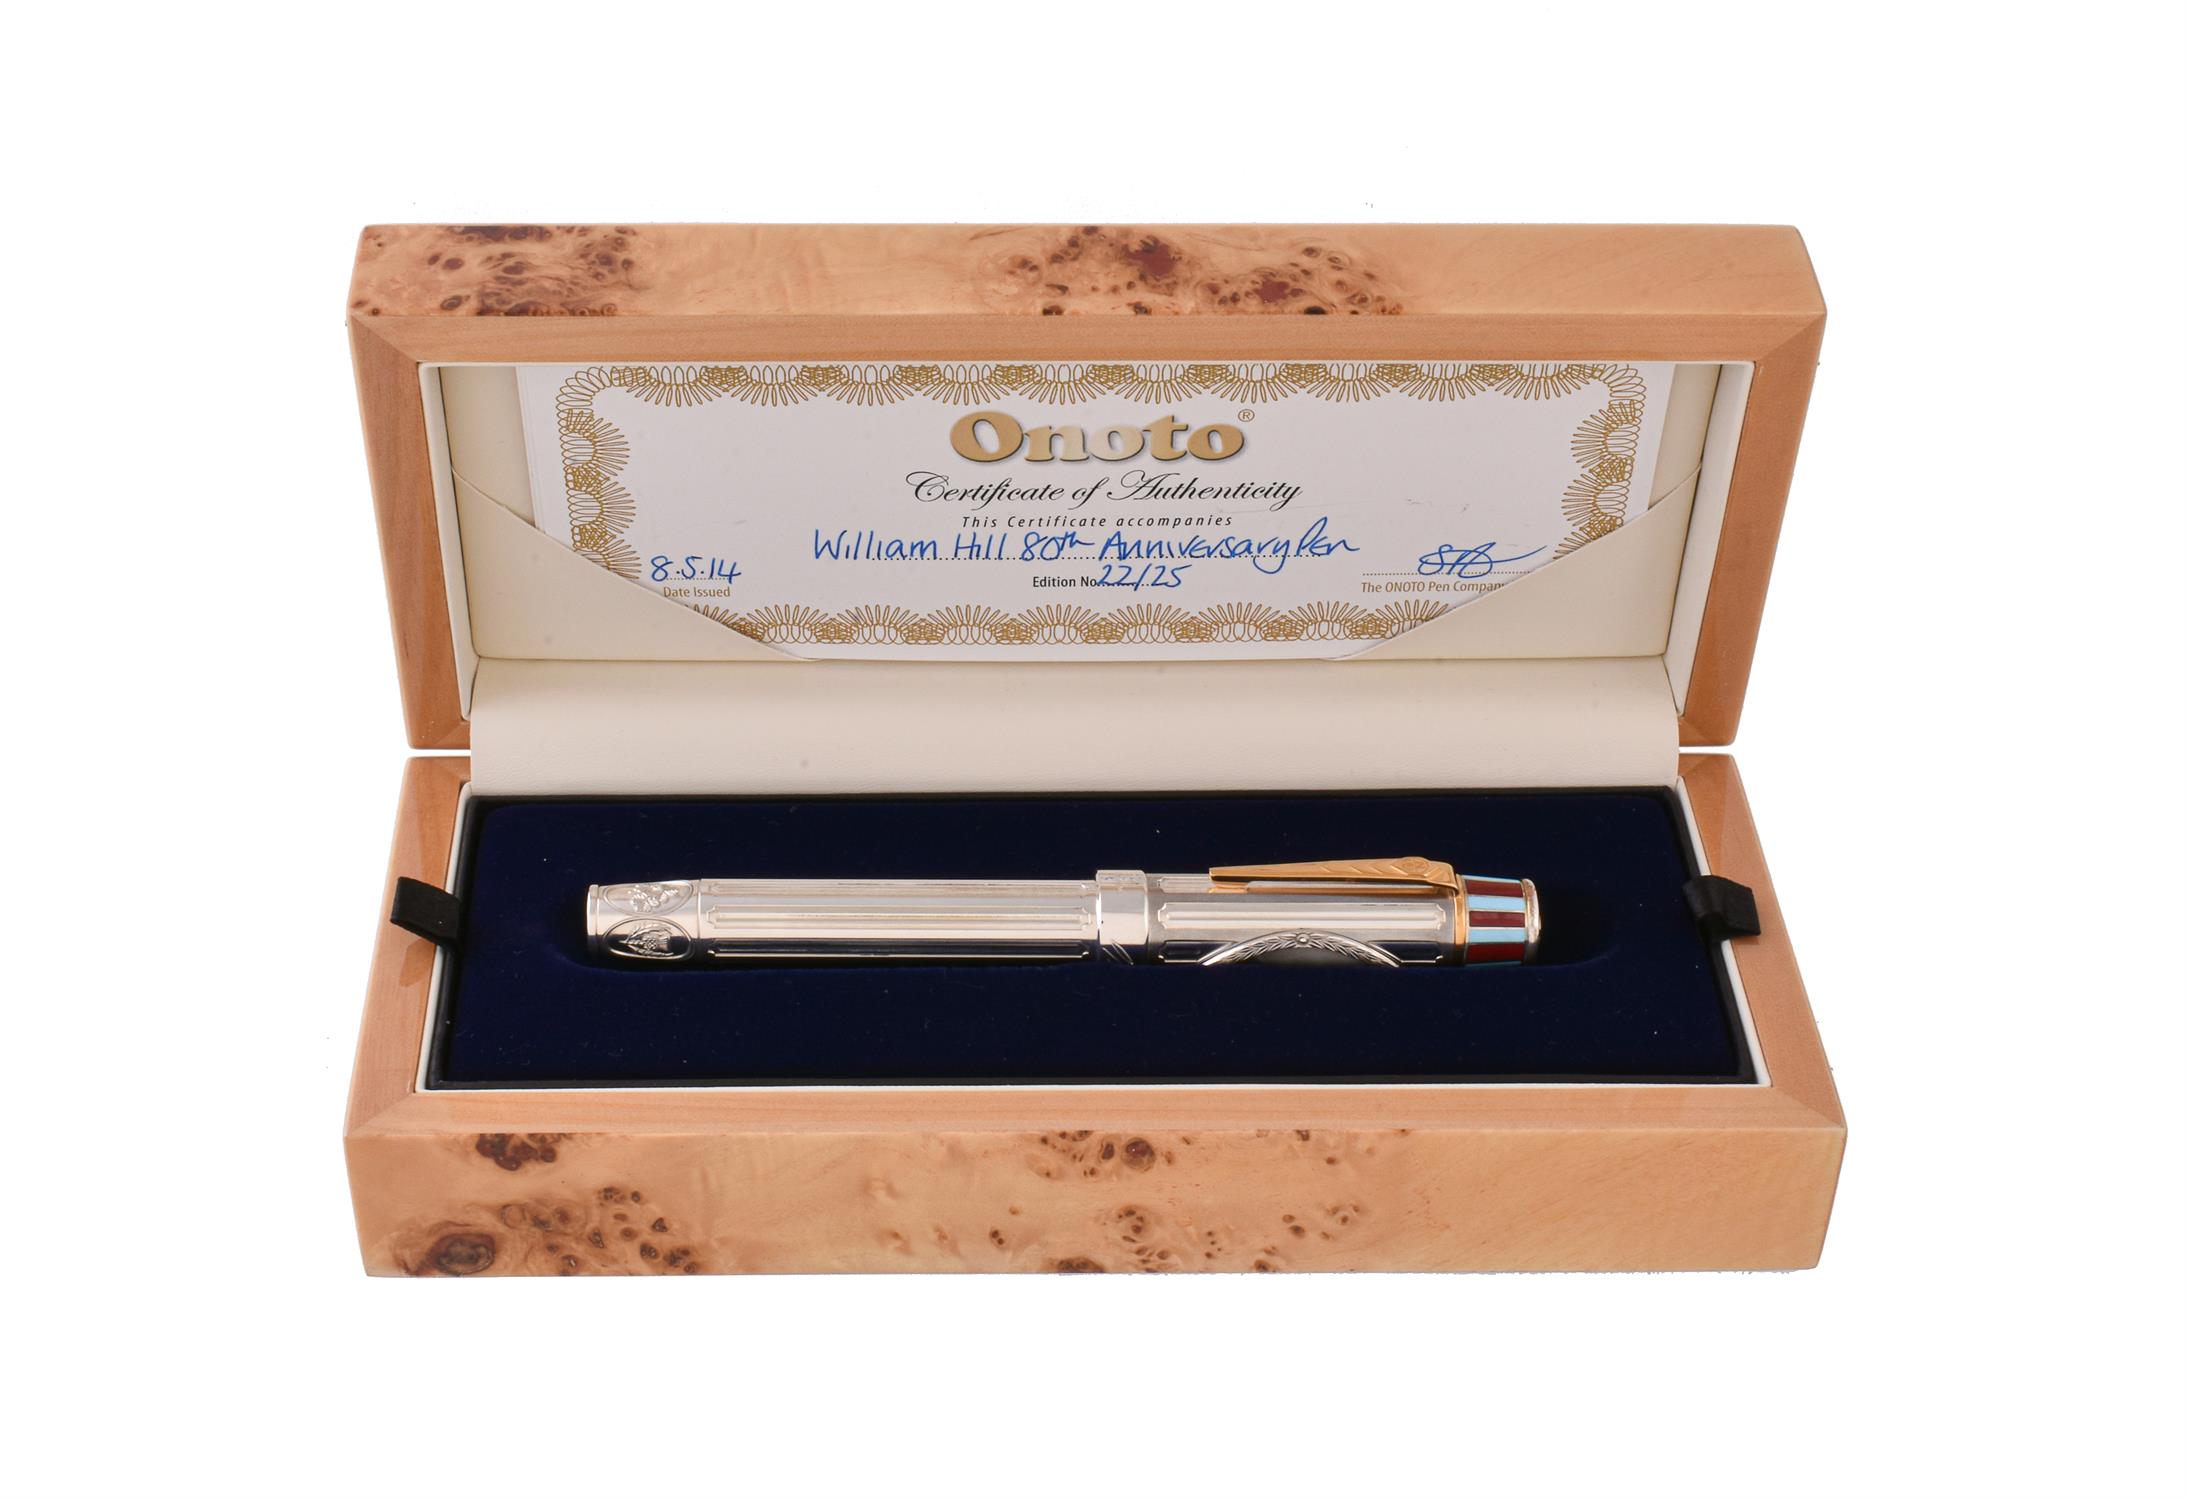 Onoto, William Hill 80th Anniversary, a limited edition silver fountain pen - Image 3 of 3